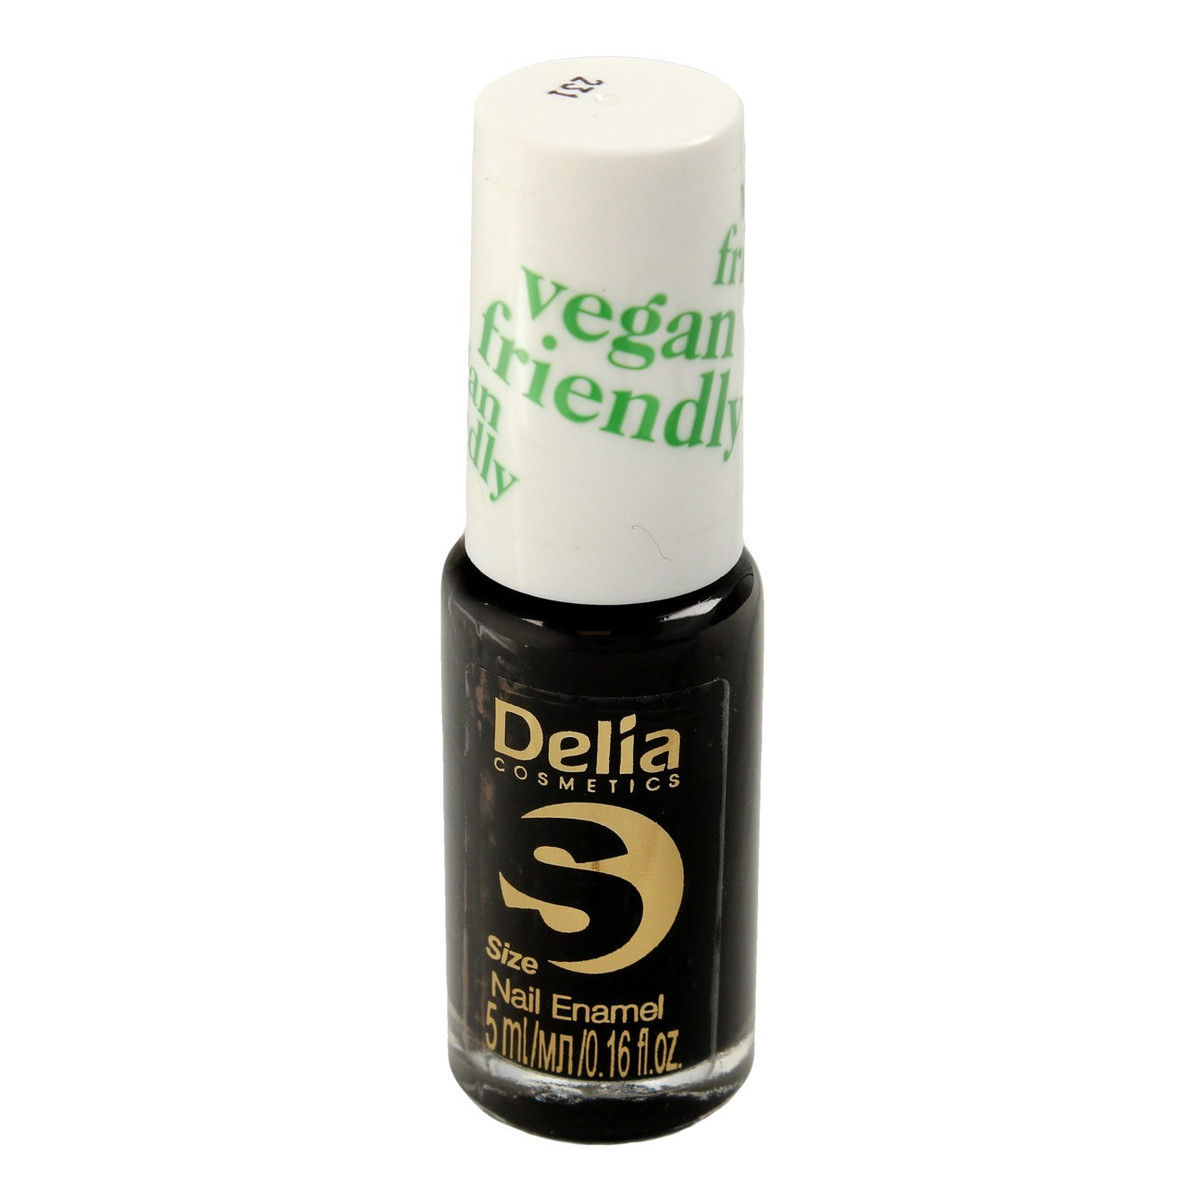 Delia Vegan Friendly Emalia do paznokci Size S 5ml